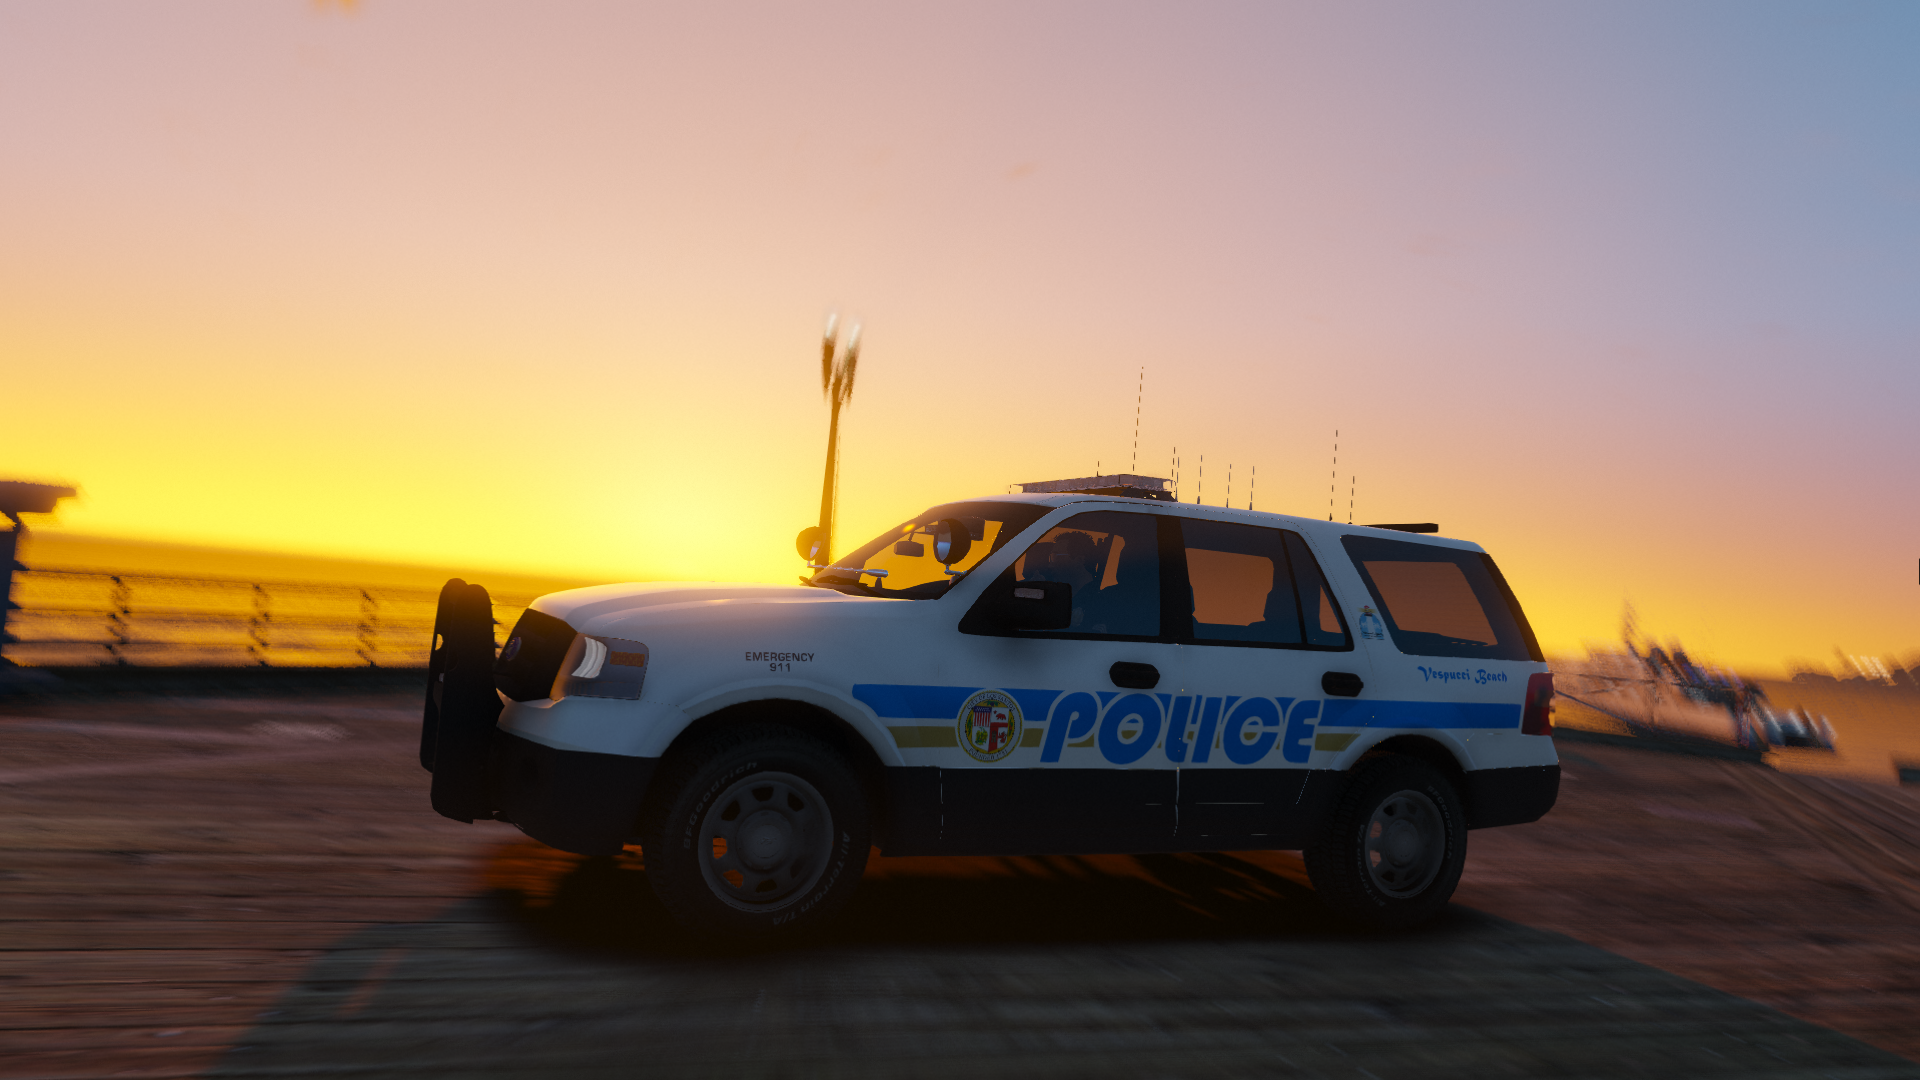 Vespucci Beach Police - 2013 Ford Expedition - GTA5-Mods.com